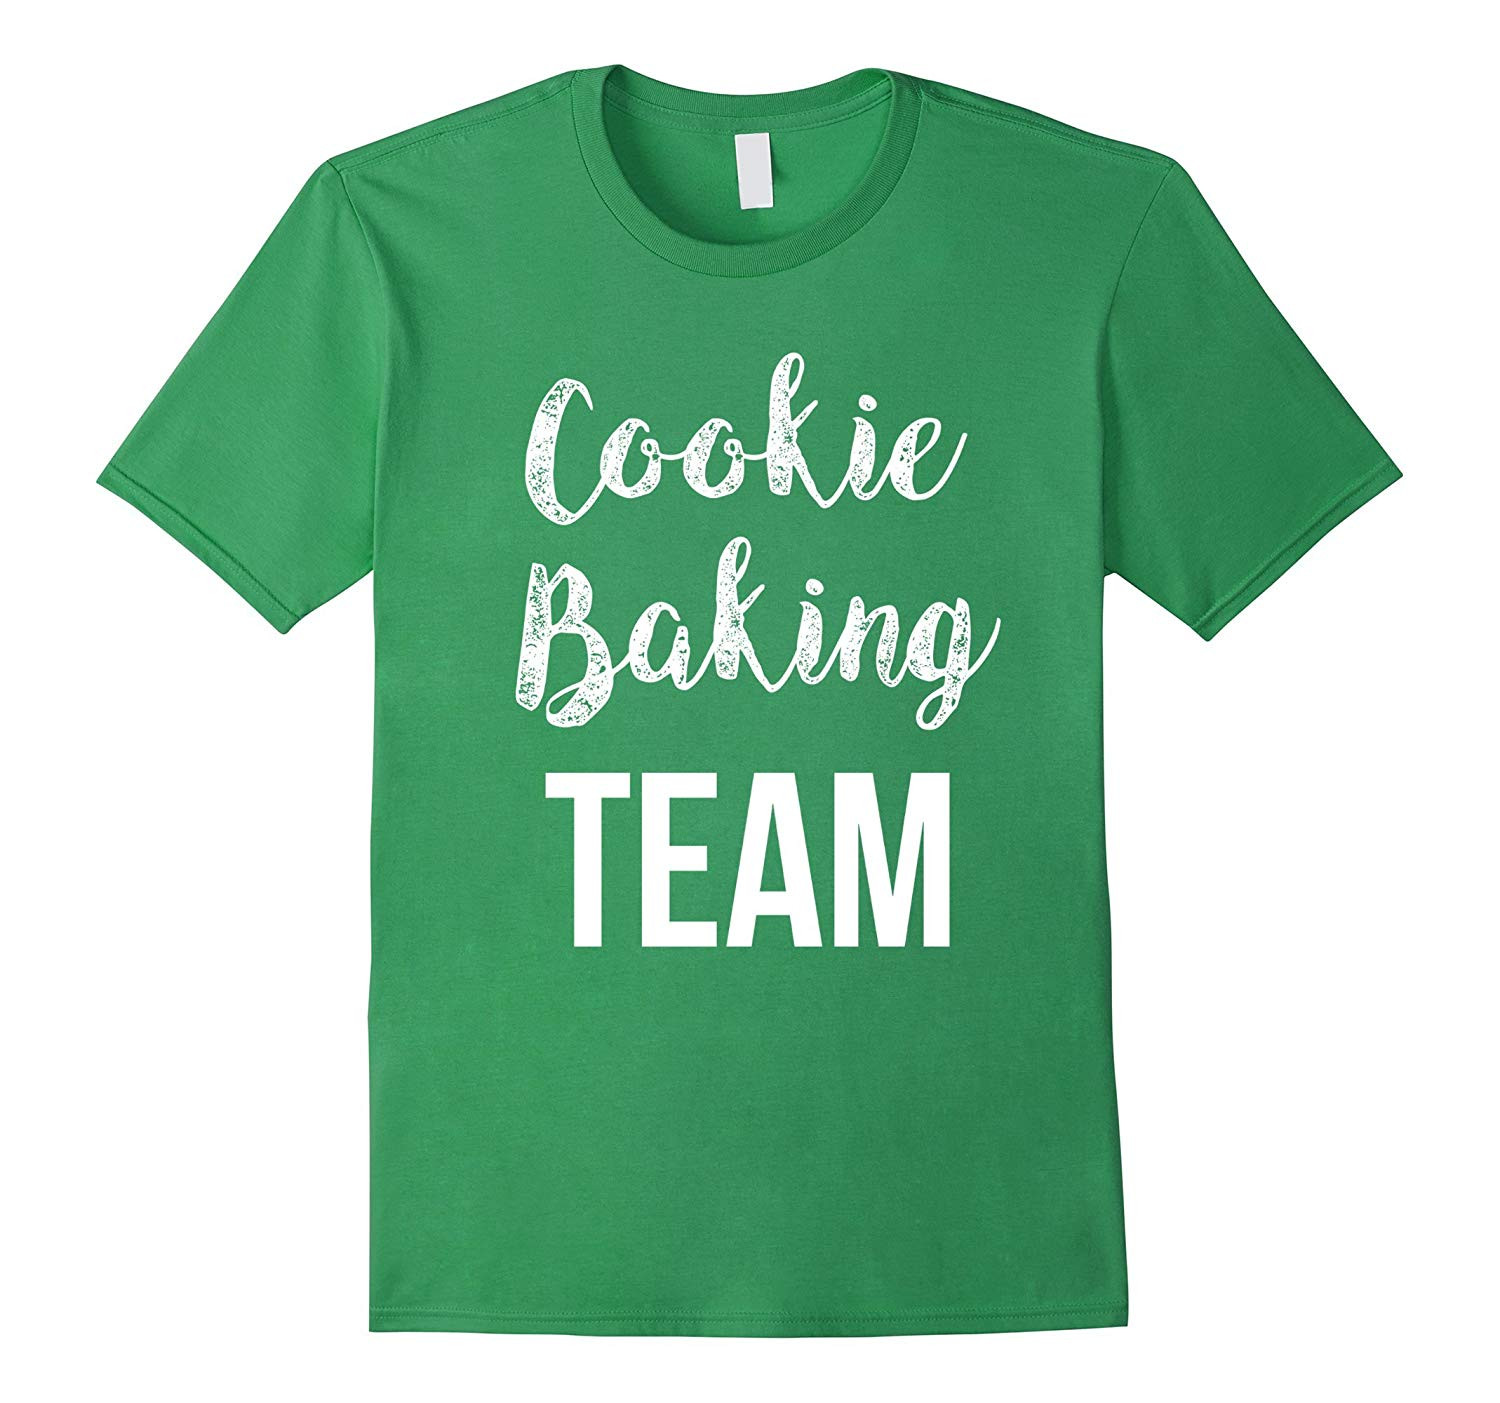 Christmas Baking Team Shirt
 Cookie Baking Team Funny Christmas T Shirt TD – Teedep